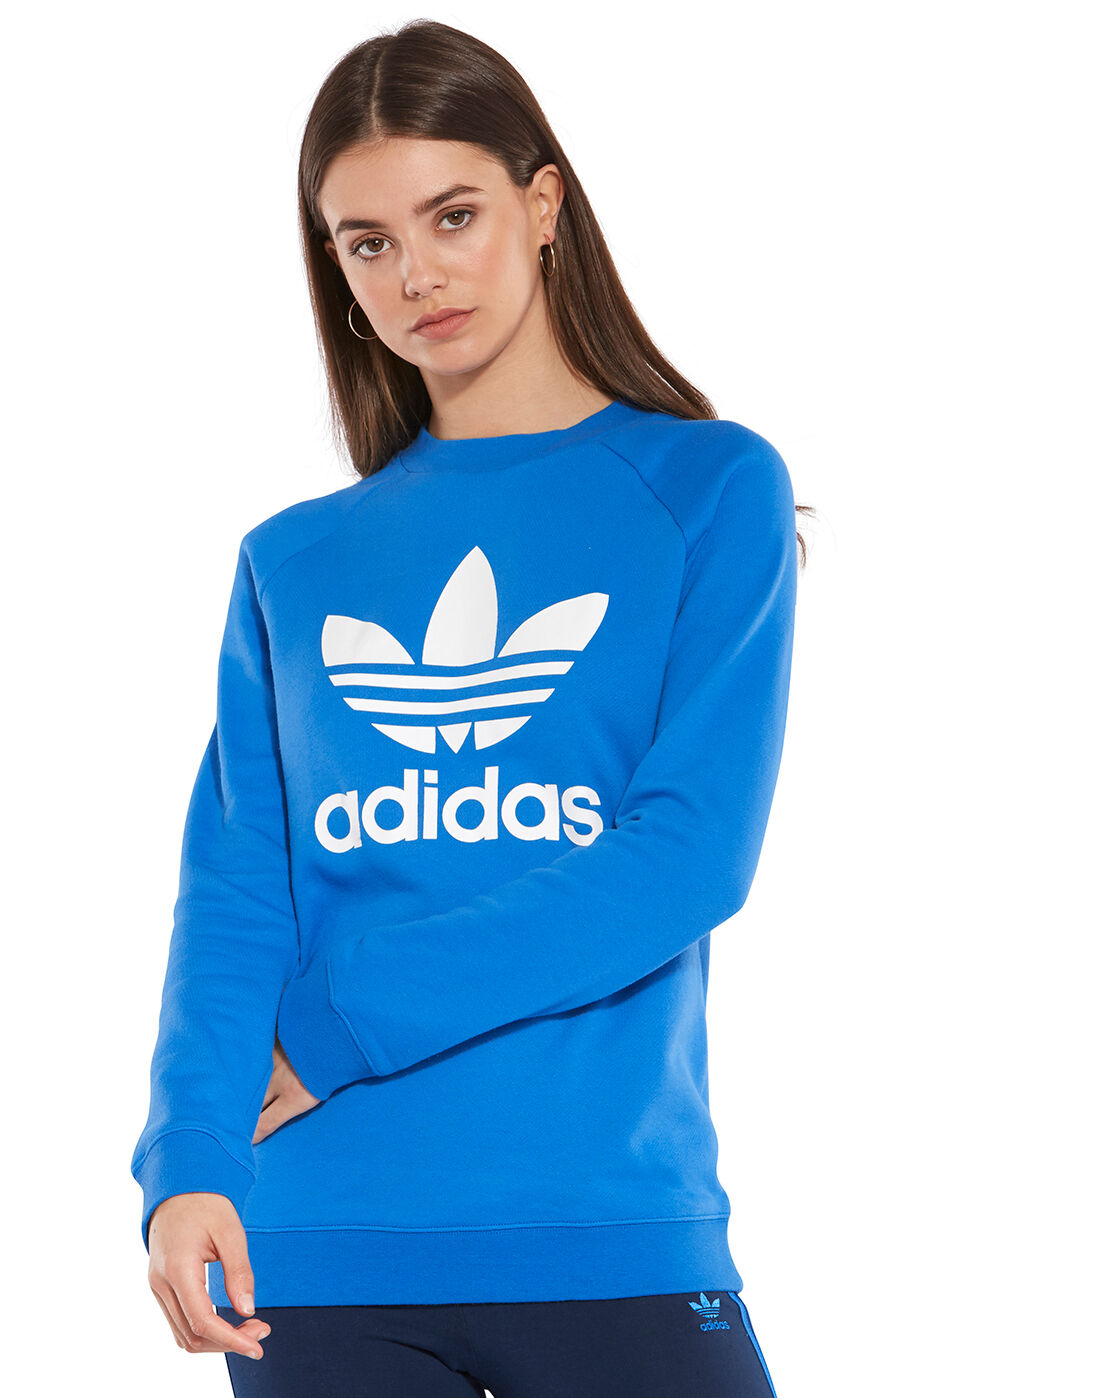 adidas blue sweatshirt womens